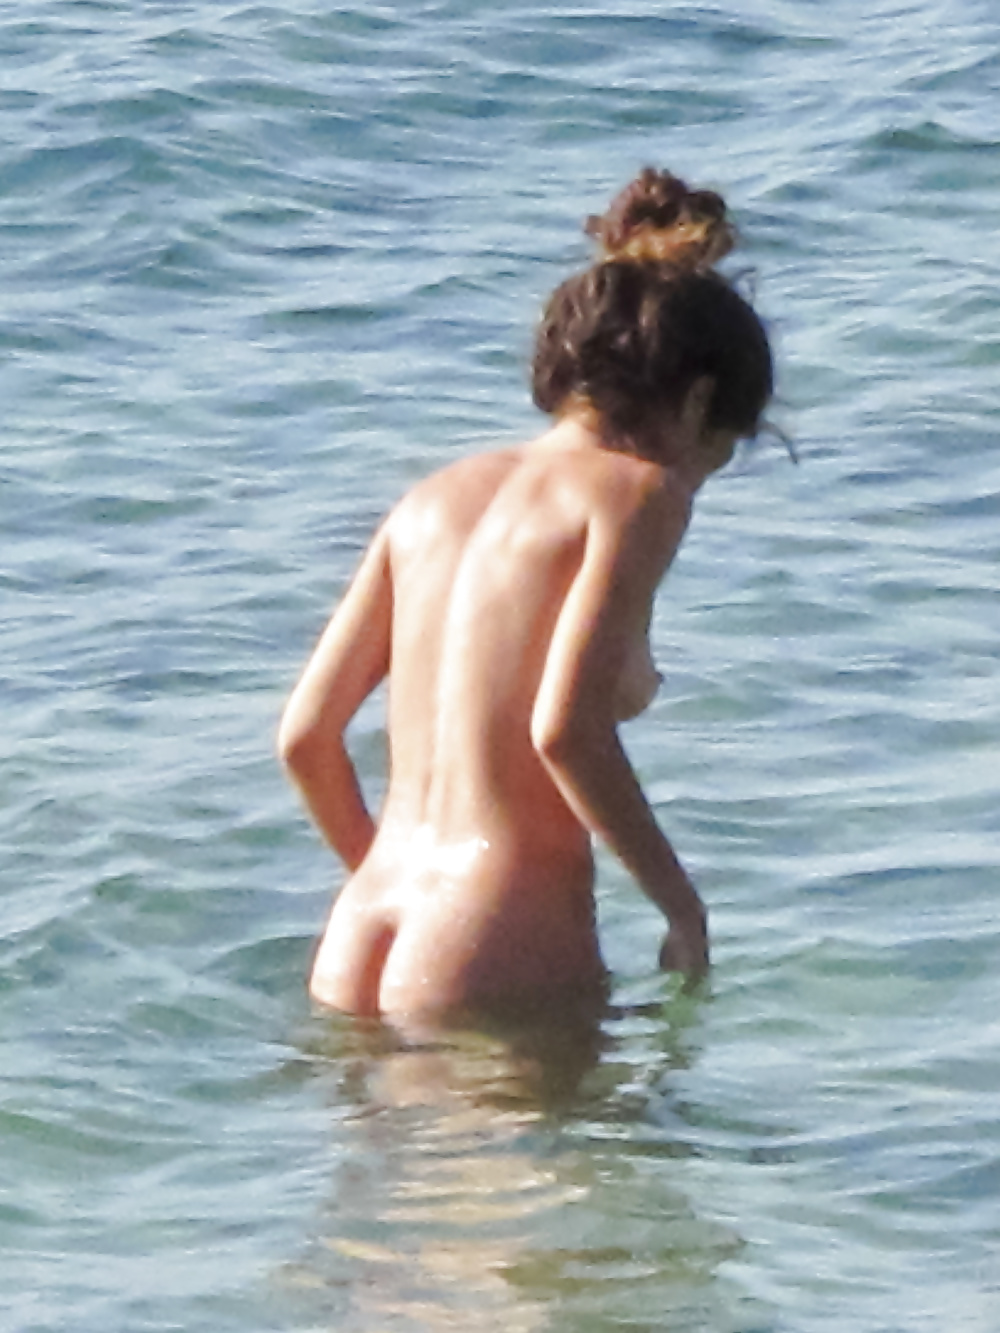 Paralia gymniston kalokairi 2015 - nude beach summer 2015 pict gal